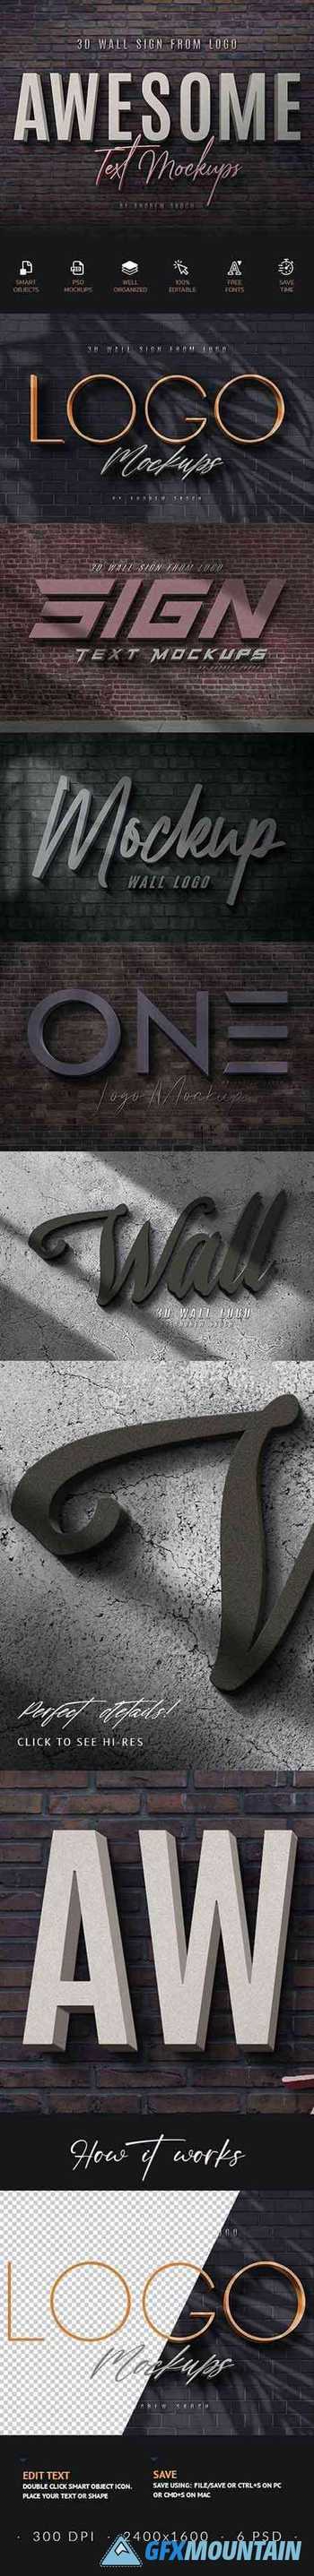 3D Wall Logo Creator 30352685